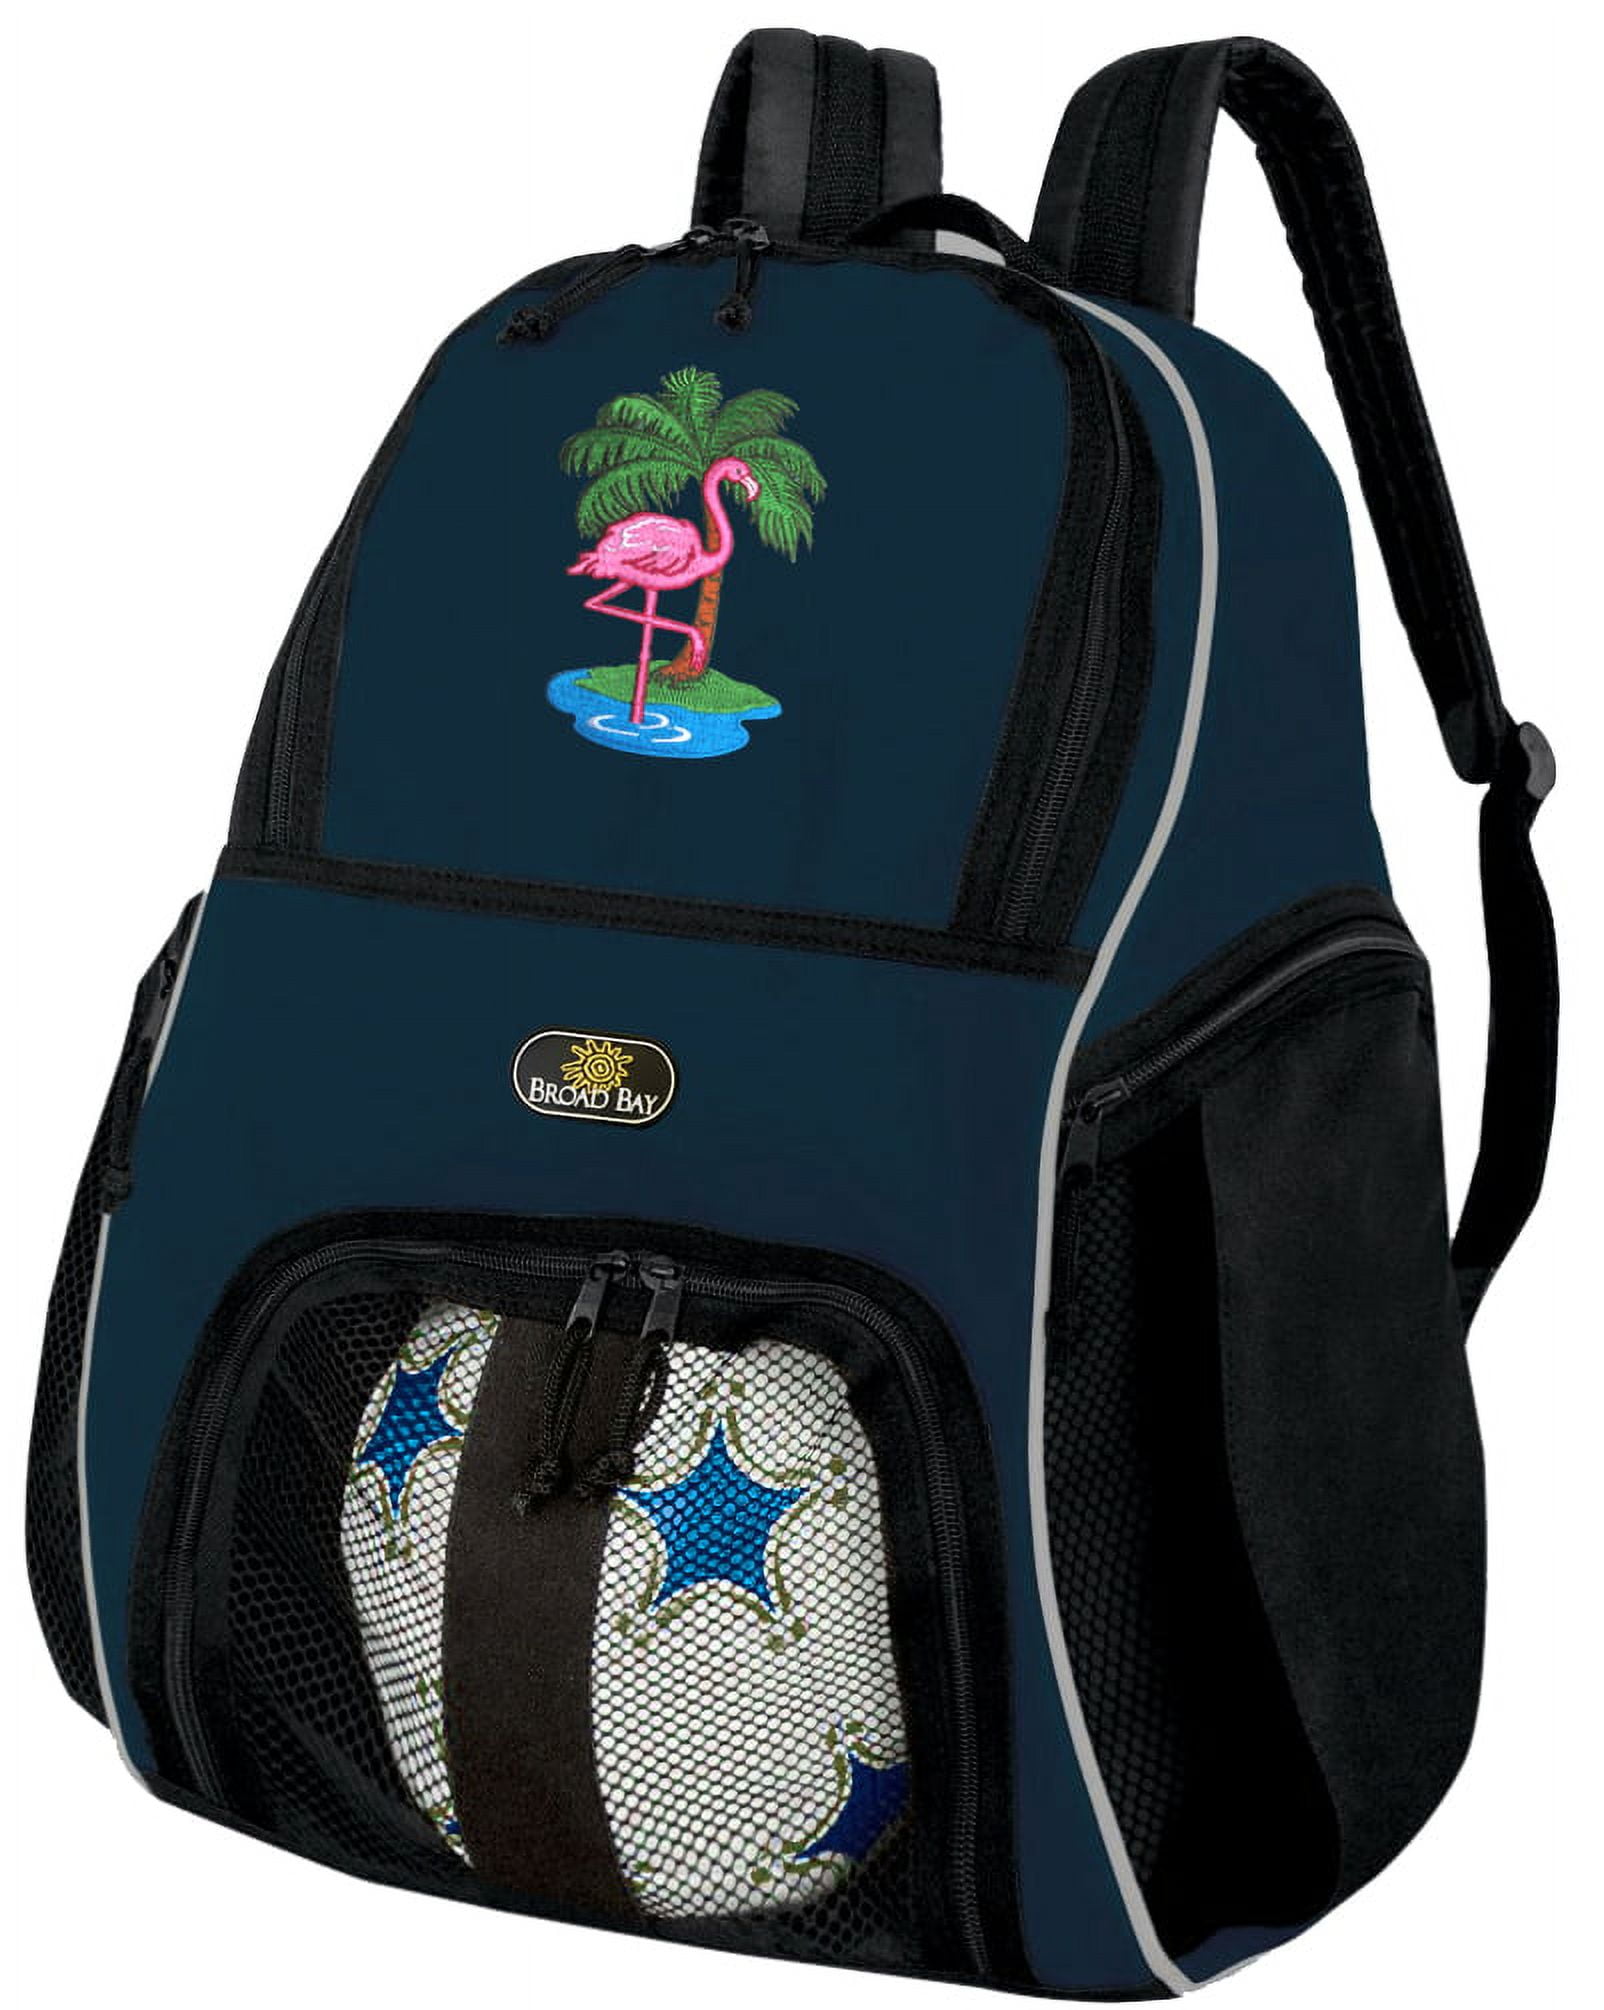 Shein Women's Blue Koala Backpack Purse New diaper bag laptop